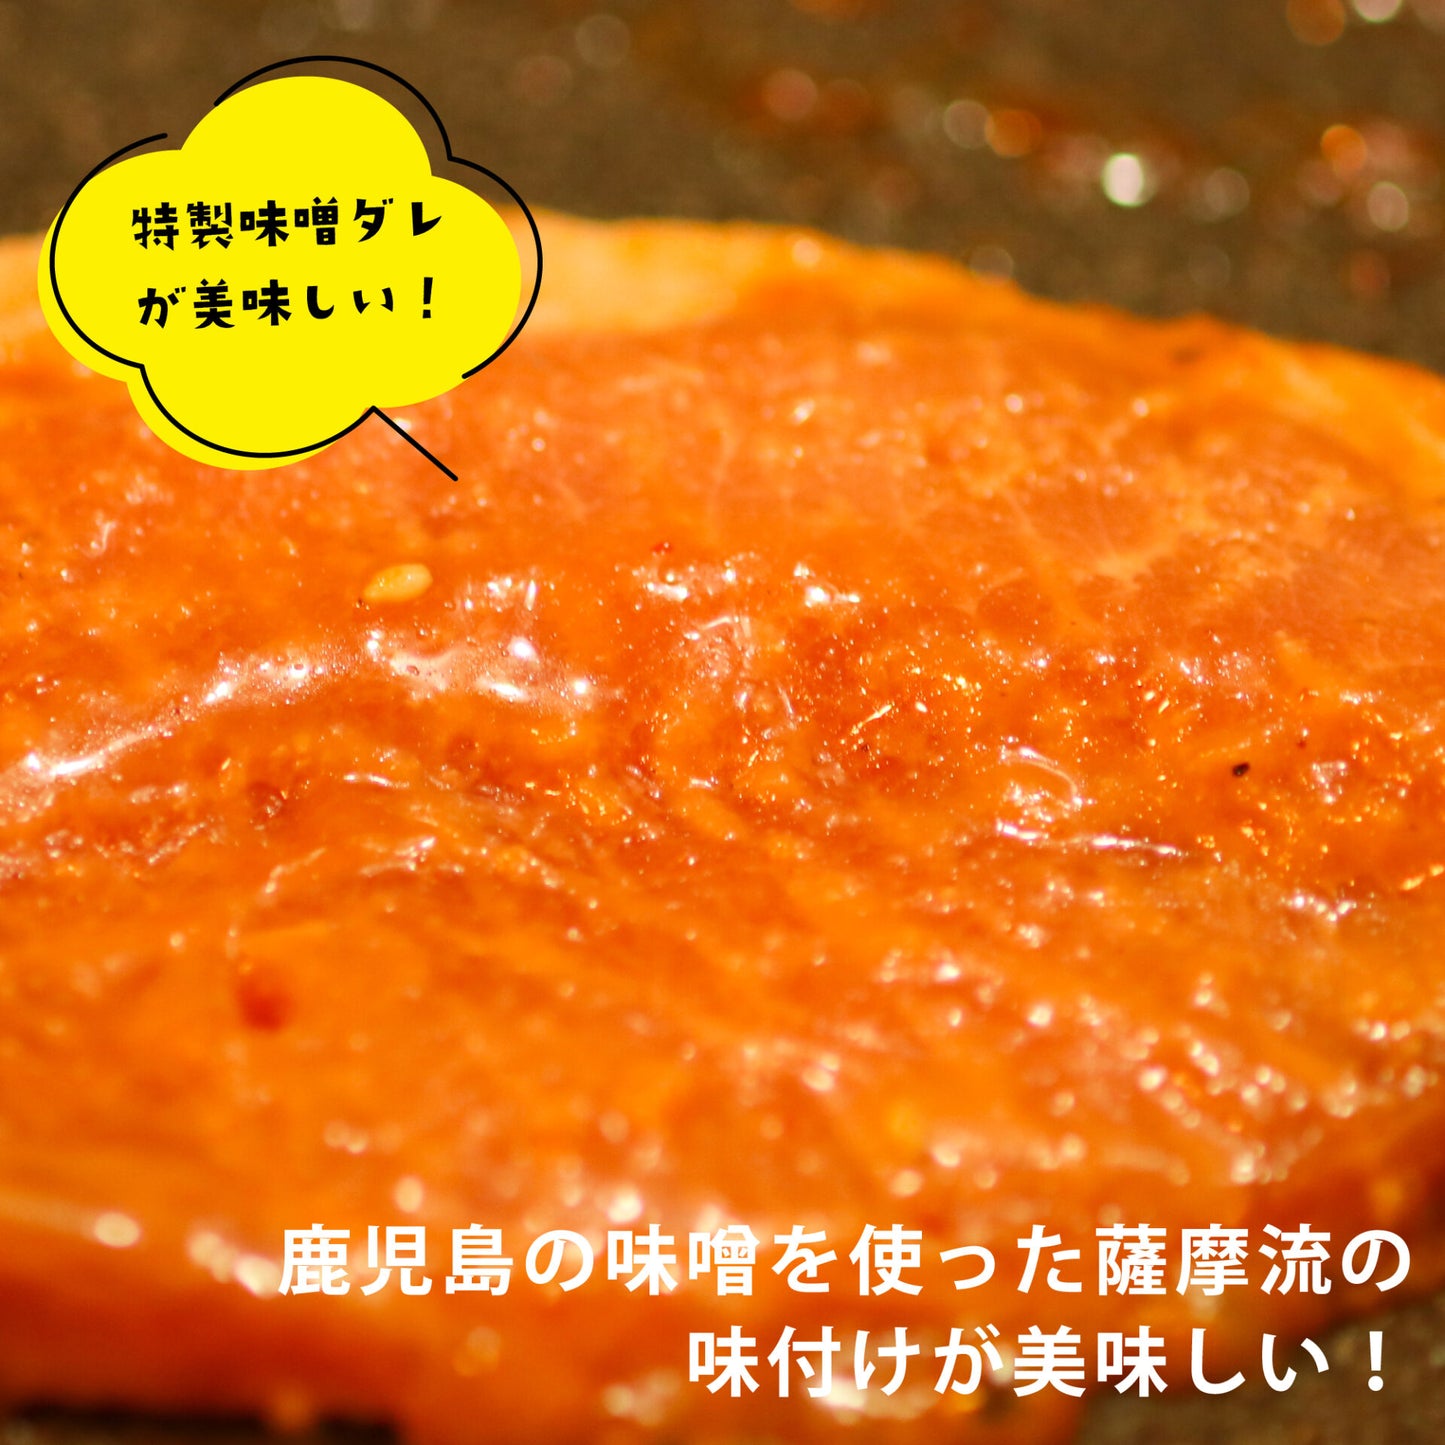 薩摩 豚 味噌漬け 400g (100gx4枚)